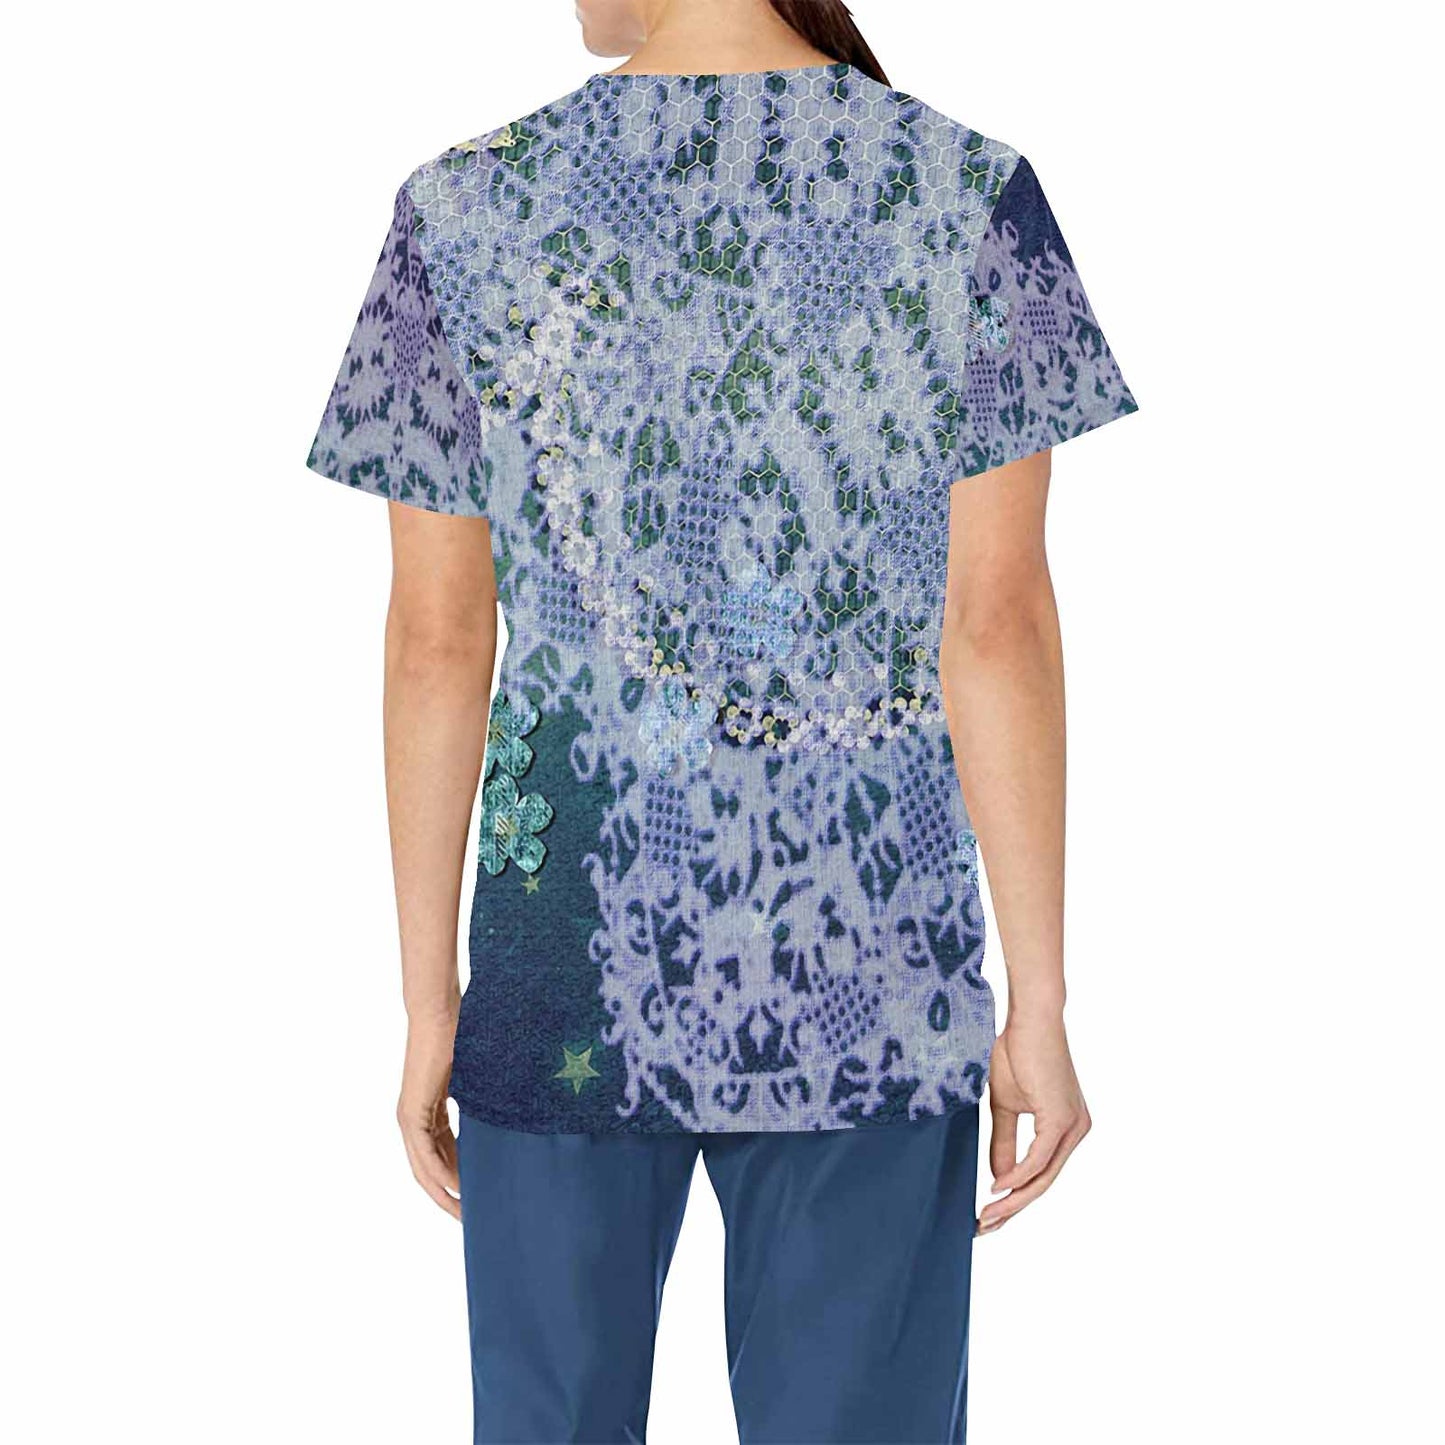 Victorian lace print professional scrubs, nurses scrub, unisex, design 05